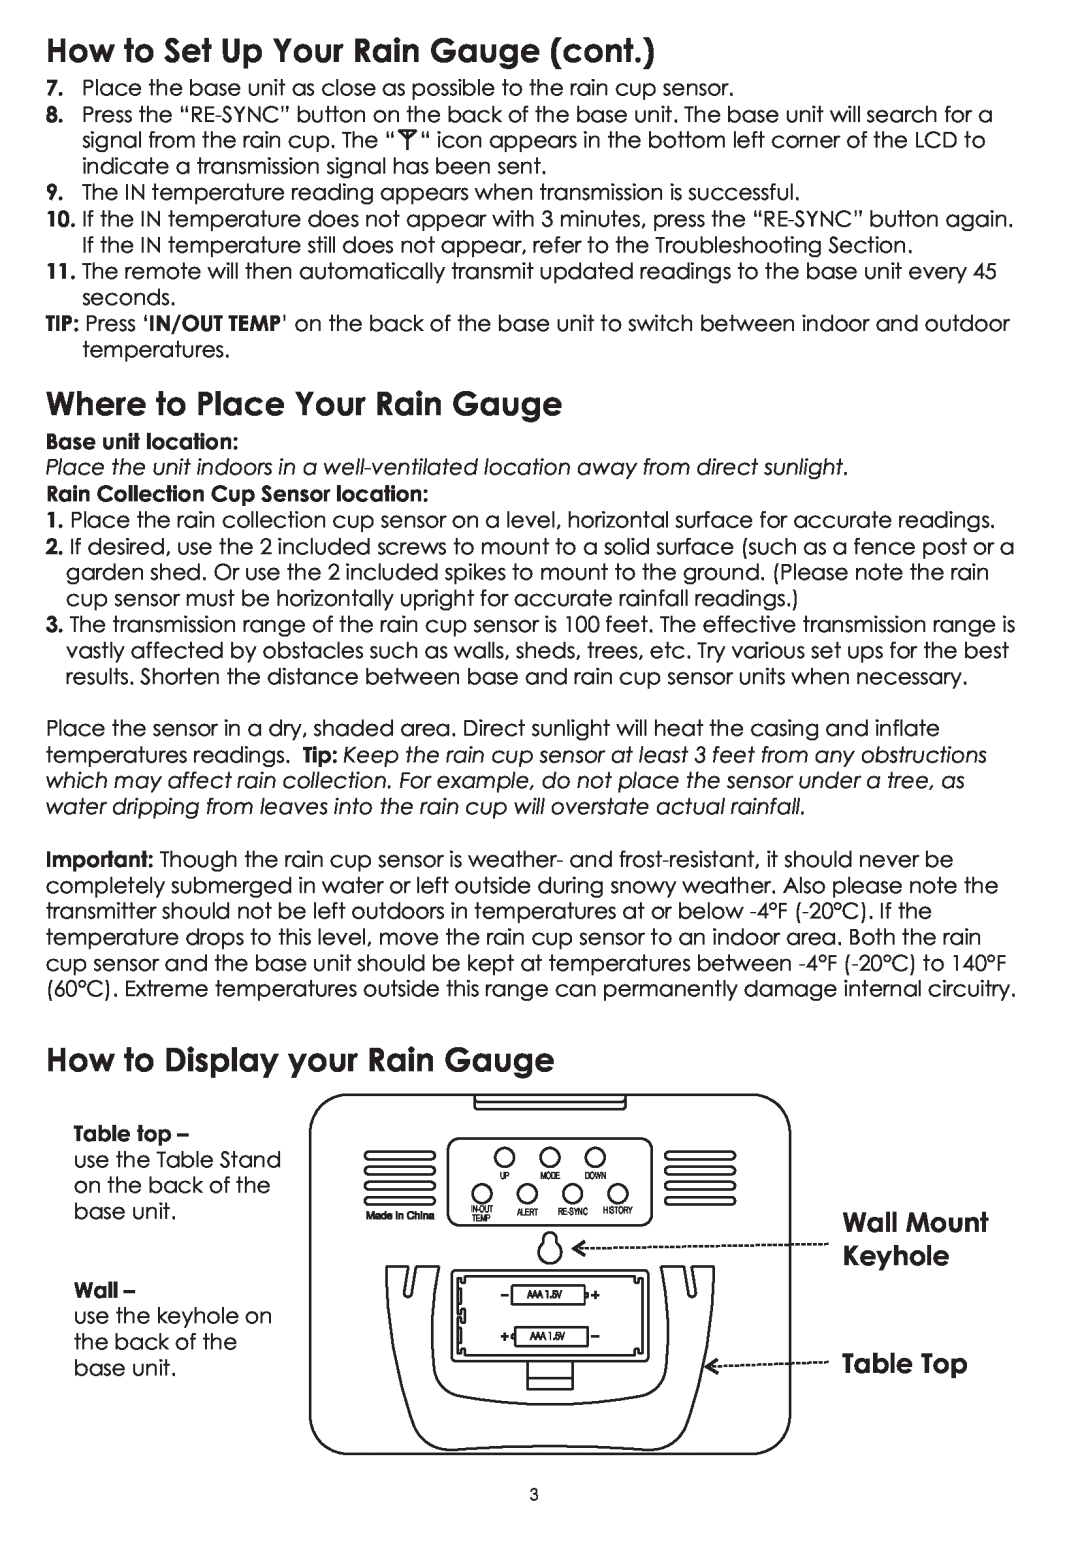 Taylor 2753 How to Set Up Your Rain Gauge cont, Where to Place Your Rain Gauge, How to Display your Rain Gauge 